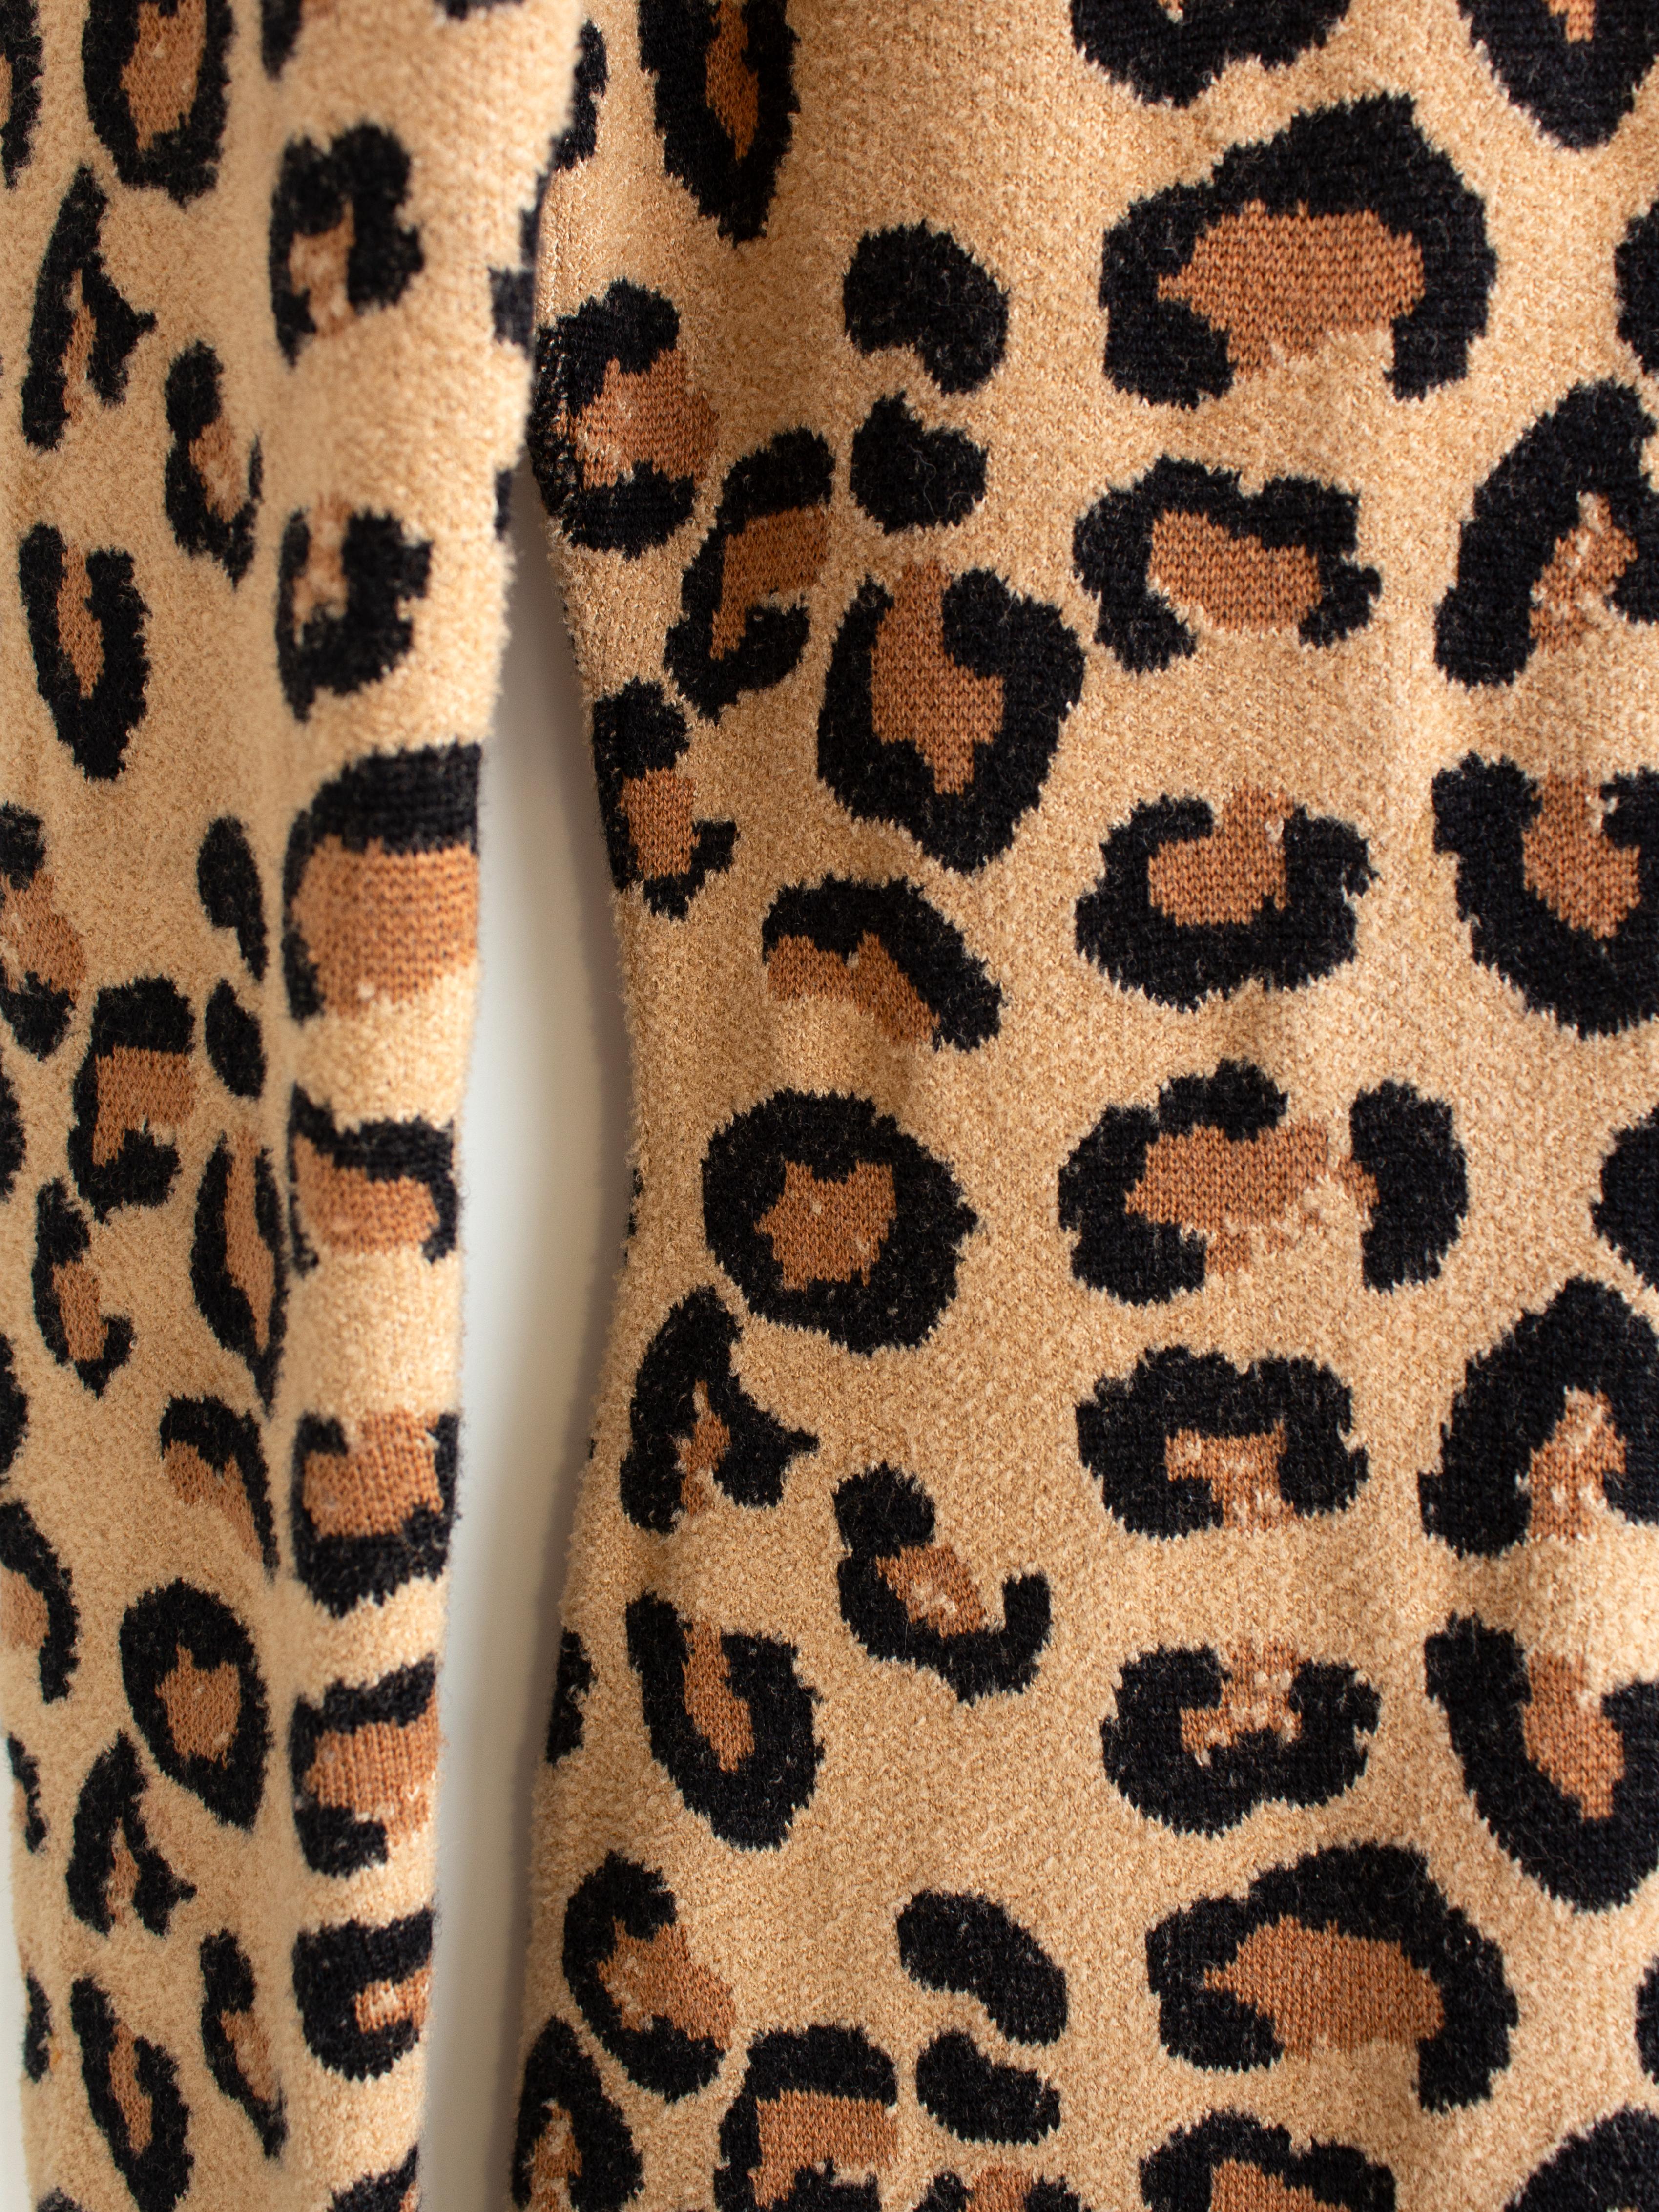 Iconic Alaia Vintage Fall/Winter 1991 Leopard Print Knit Bodycon Dress 8